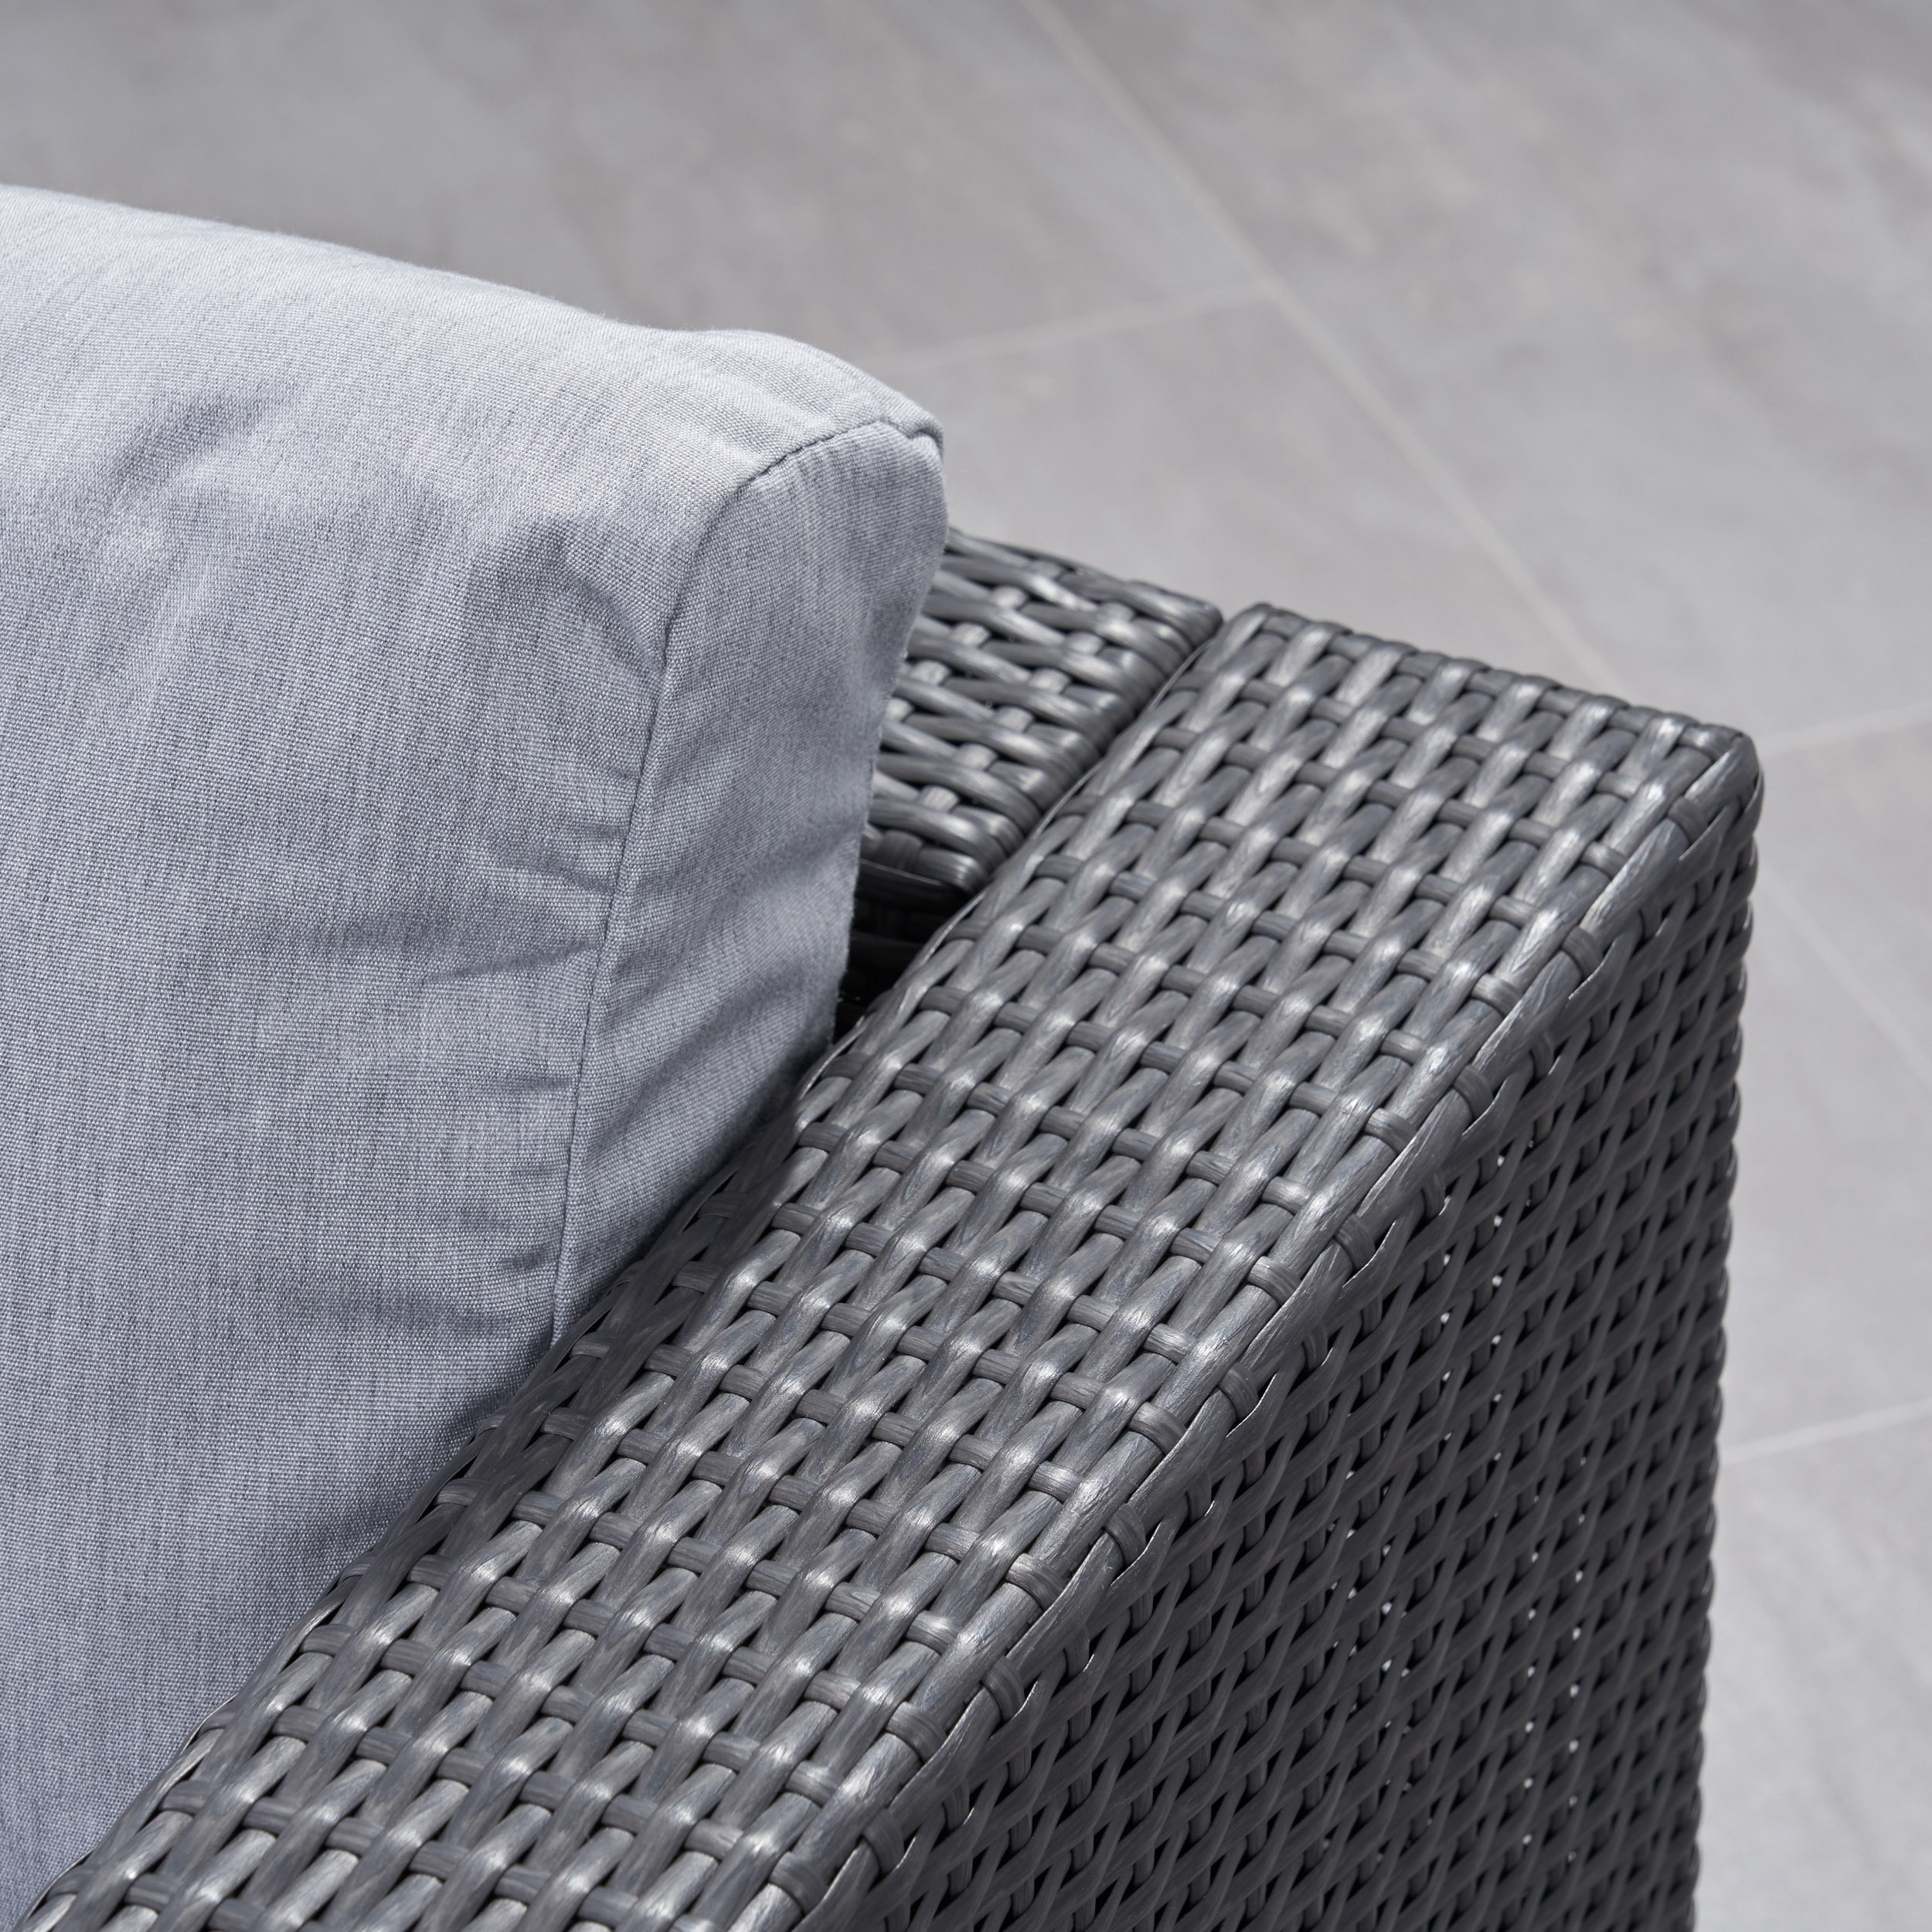 Faviola Outdoor 7 Seater Wicker Sectional Sofa Set with Sunbrella Cushions, Gray and Sunbrella Canvas Granite - image 2 of 10